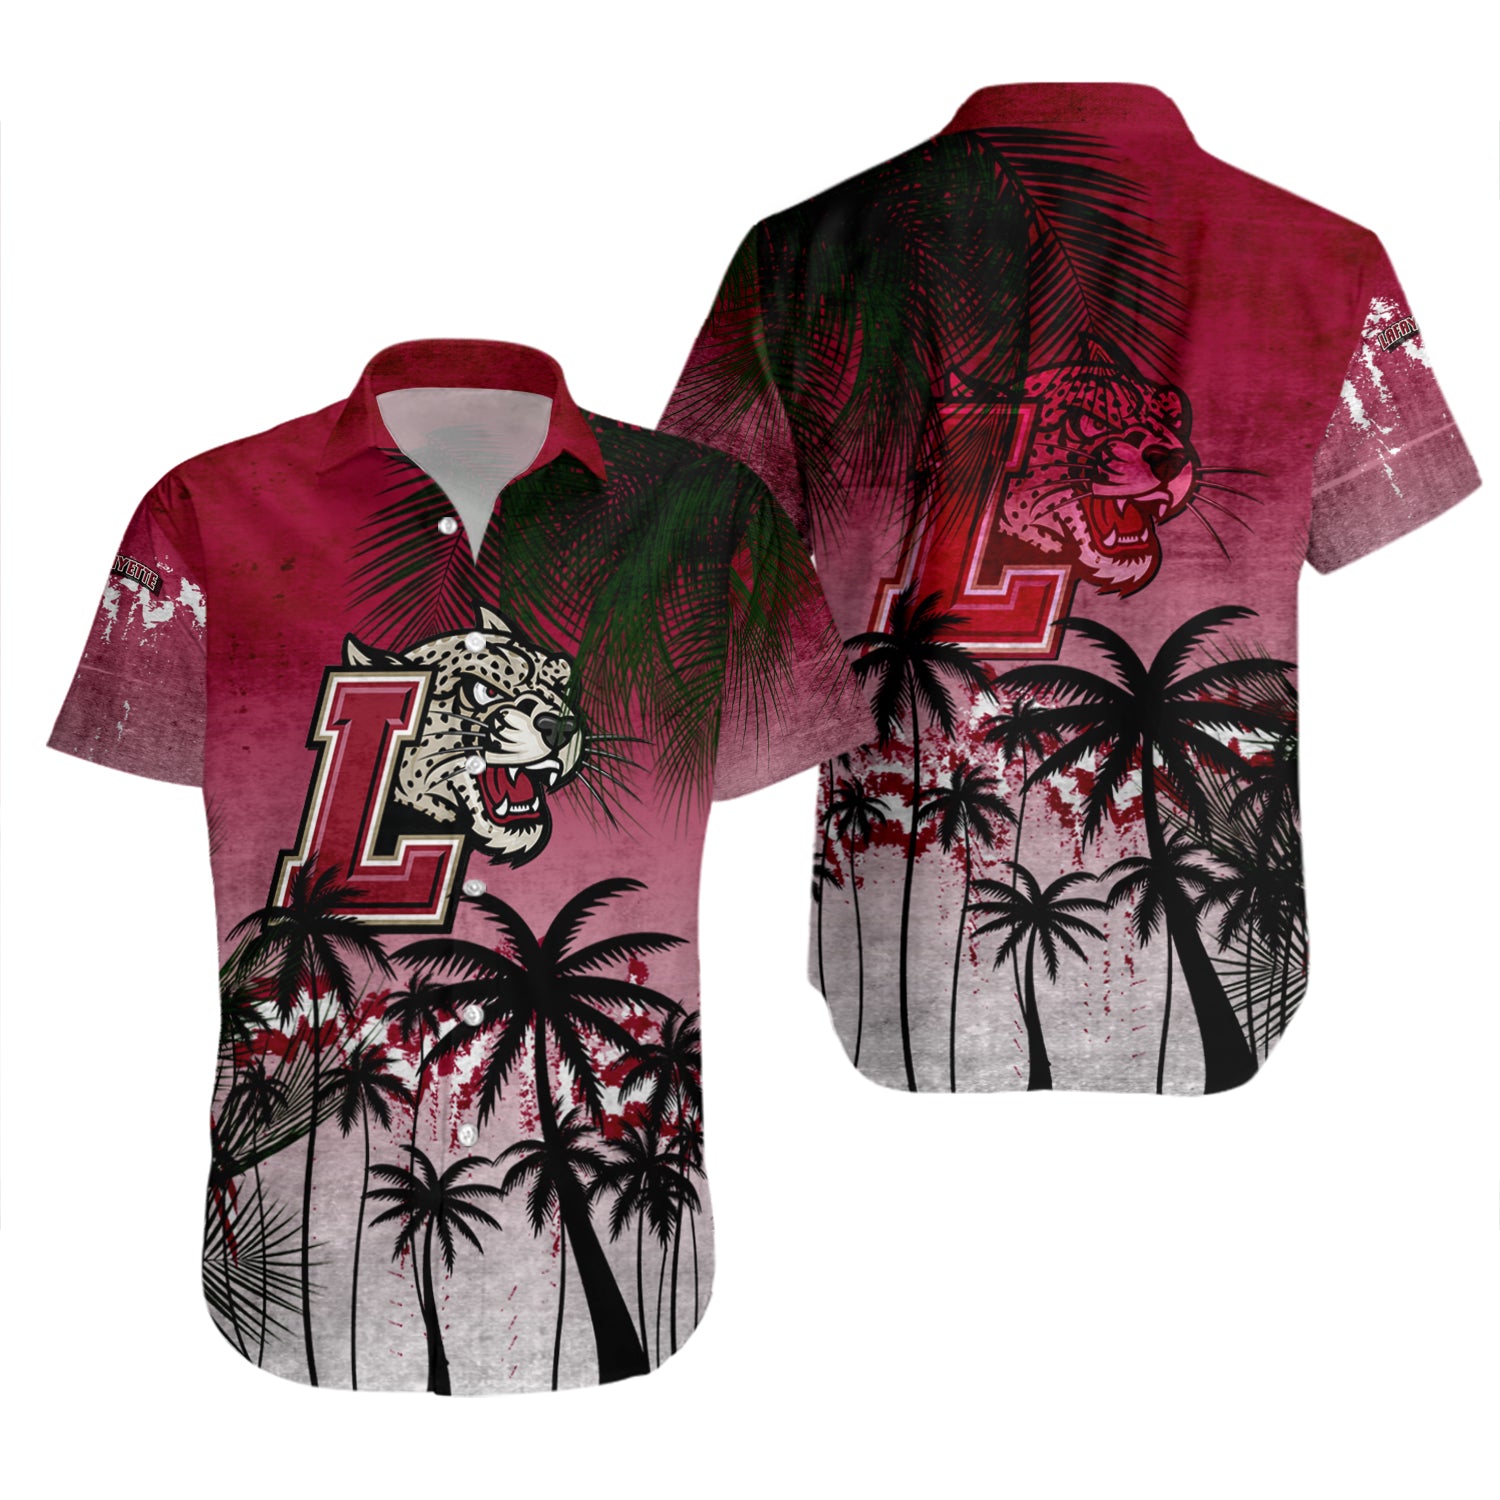 Lafayette Leopards Hawaiian Shirt Set Coconut Tree Tropical Grunge 2